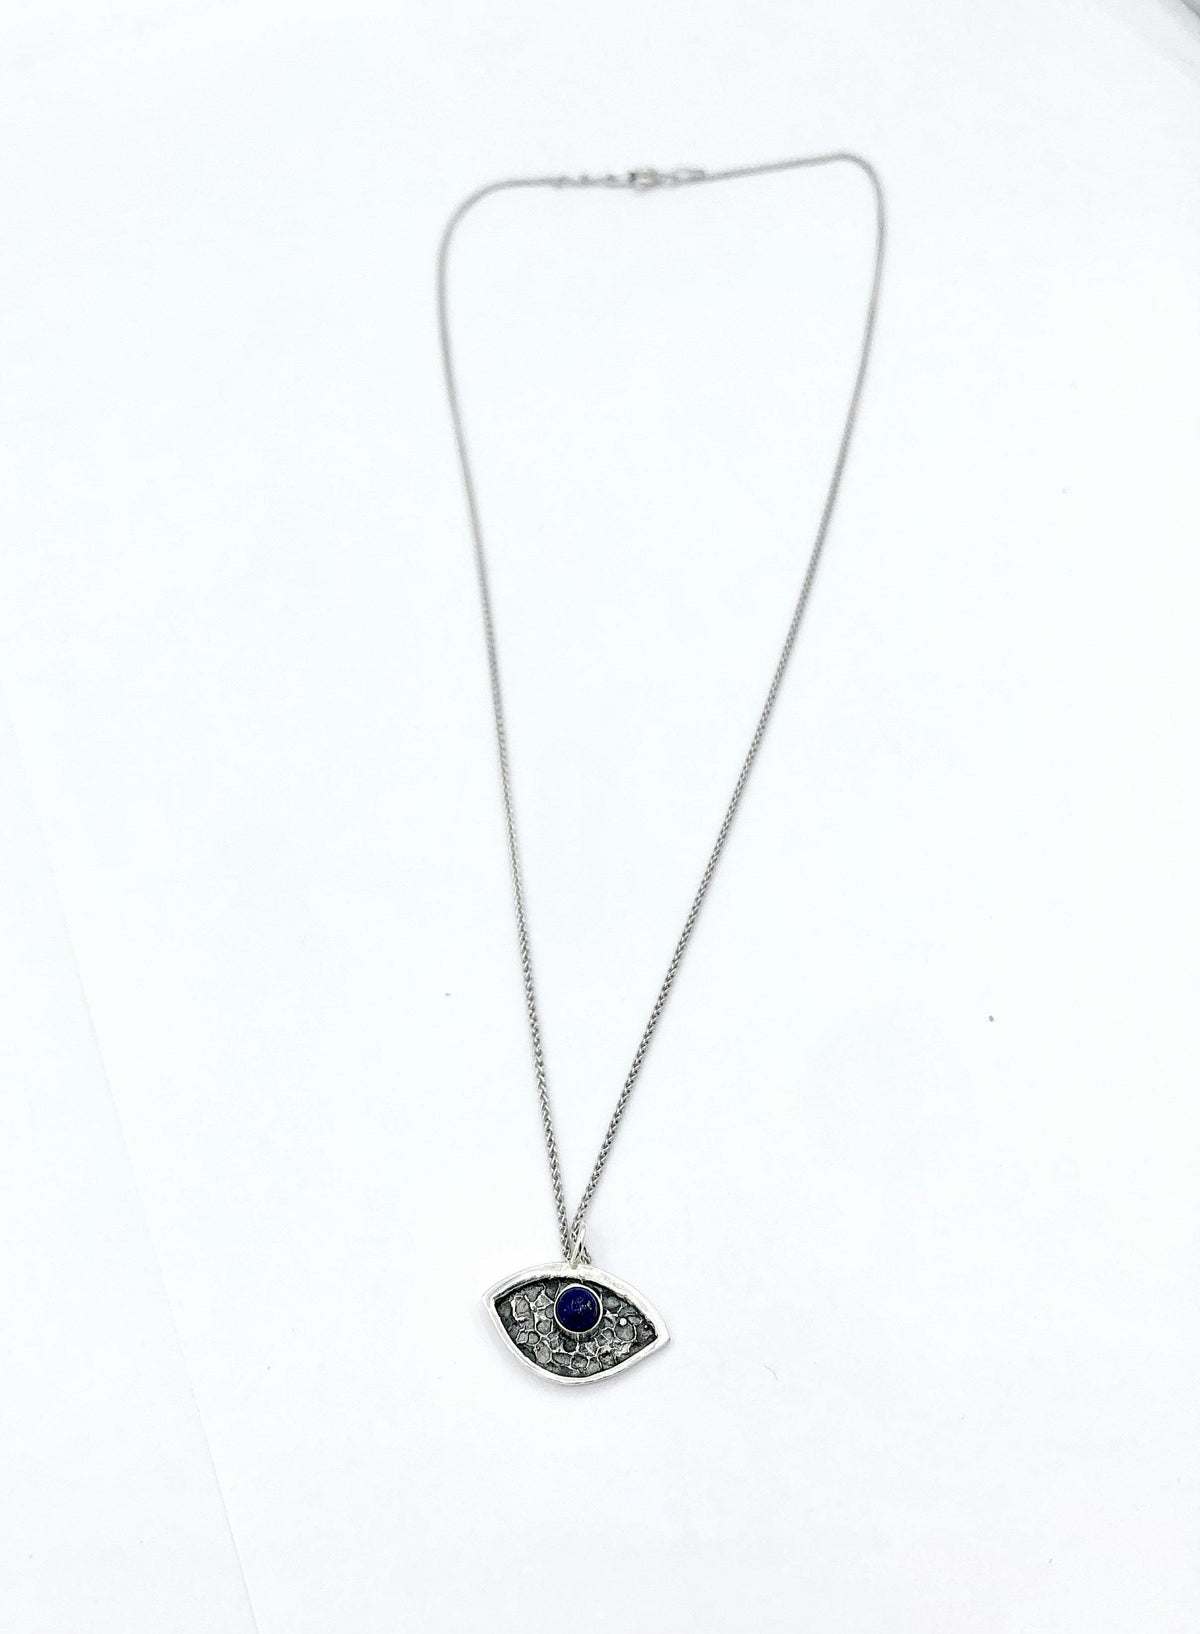 Evil eye pendant, blue lapis stone, evil eye small pendant silver chain 